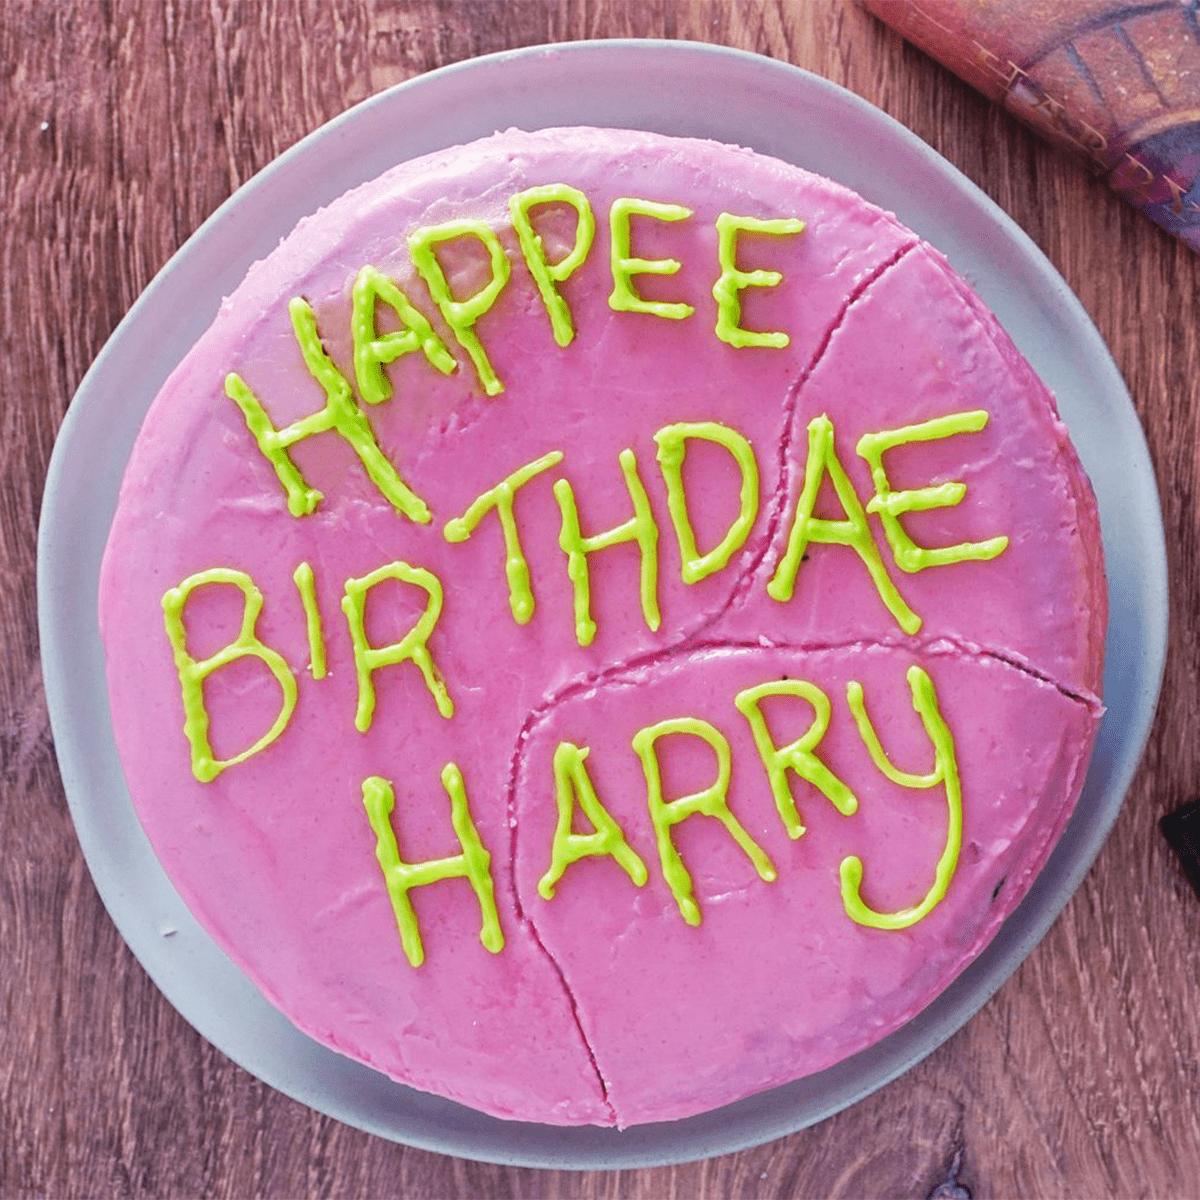 Harry Potter Birthday Party Ideas, Photo 7 of 12